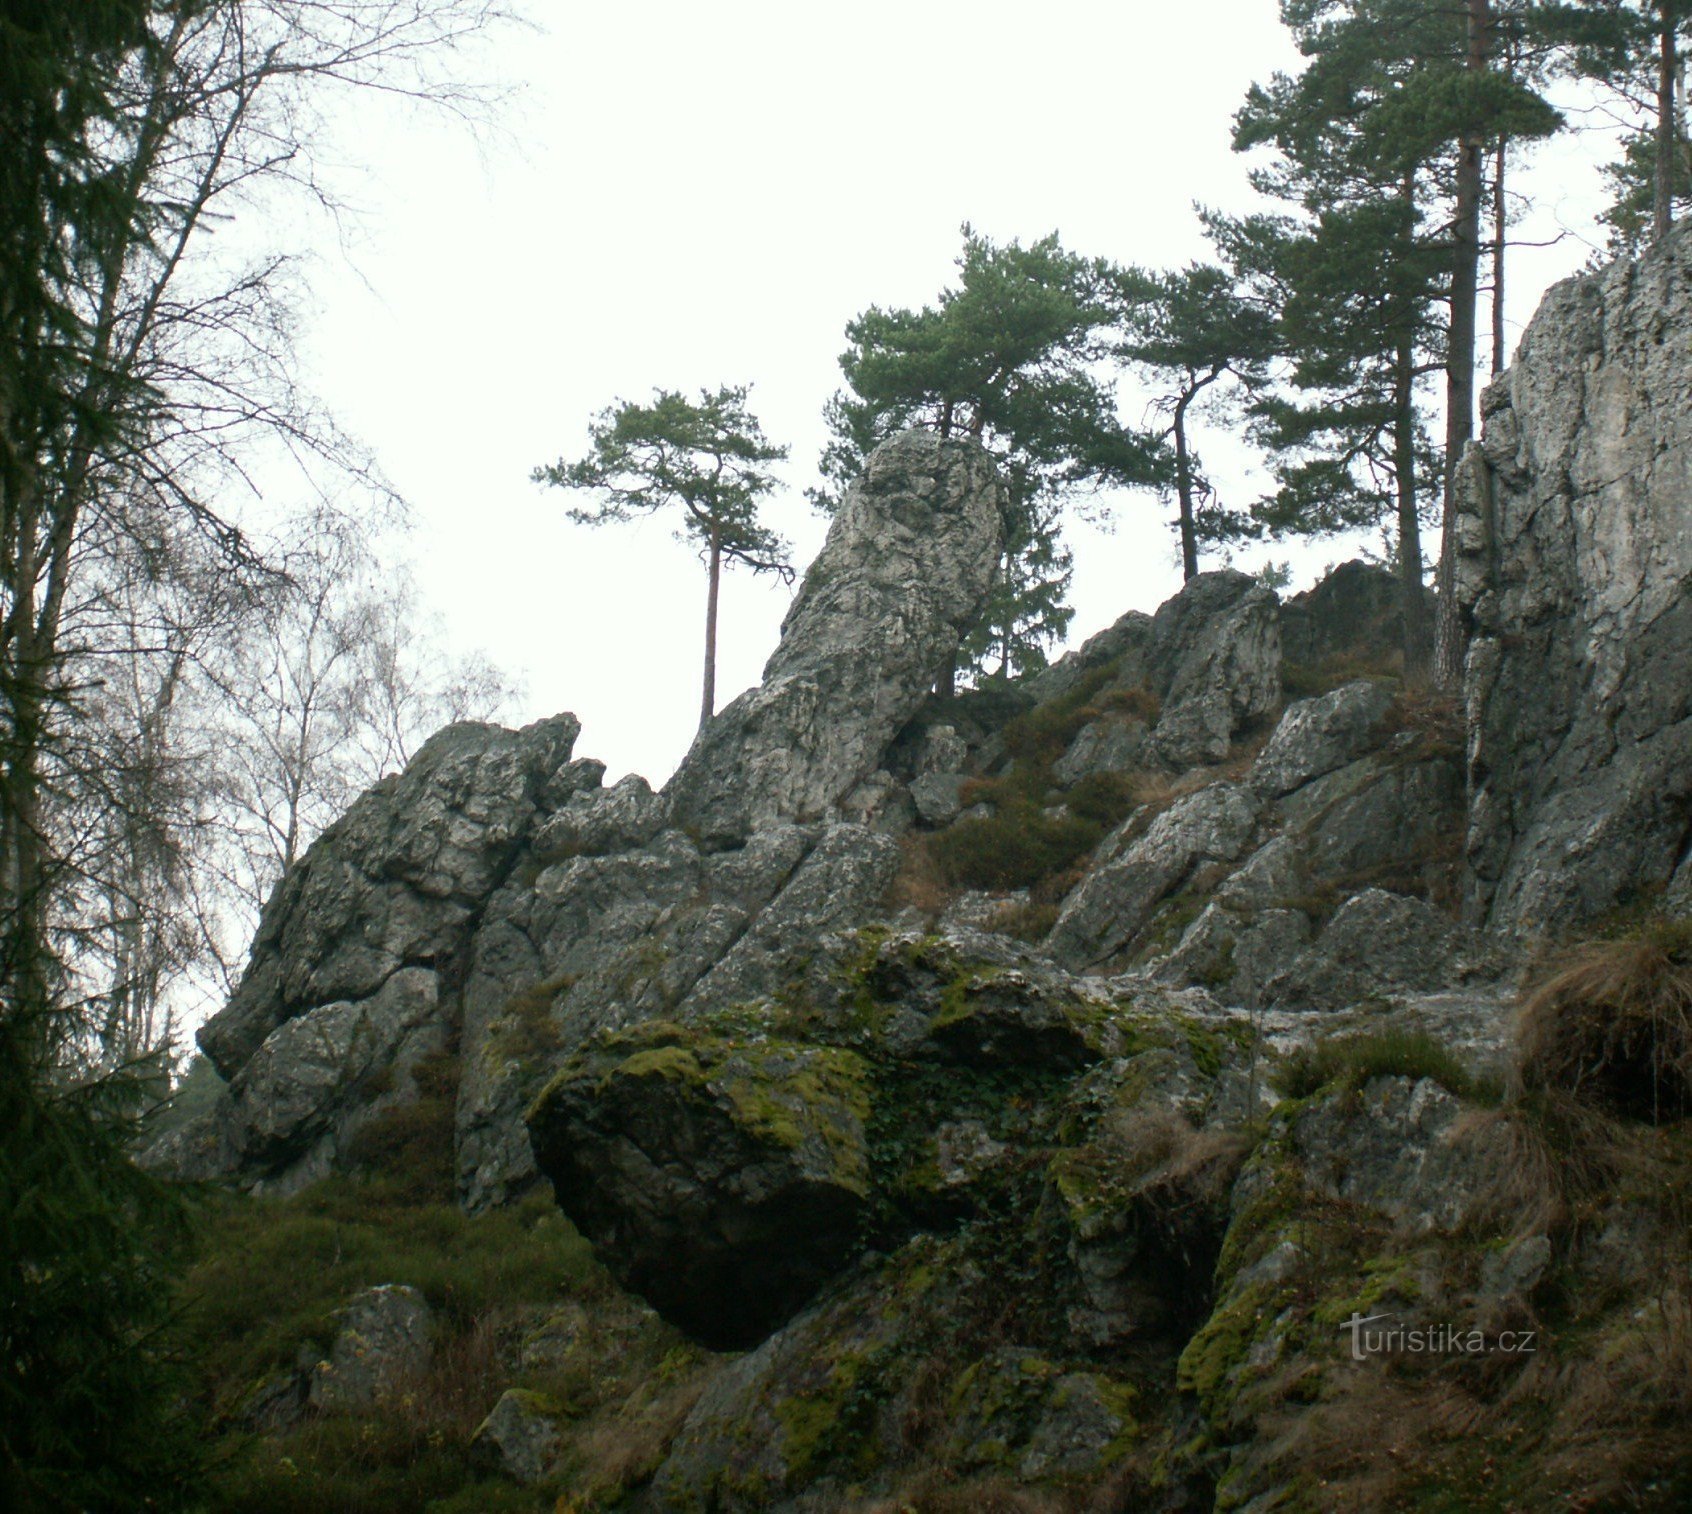 Göeth's Rocks